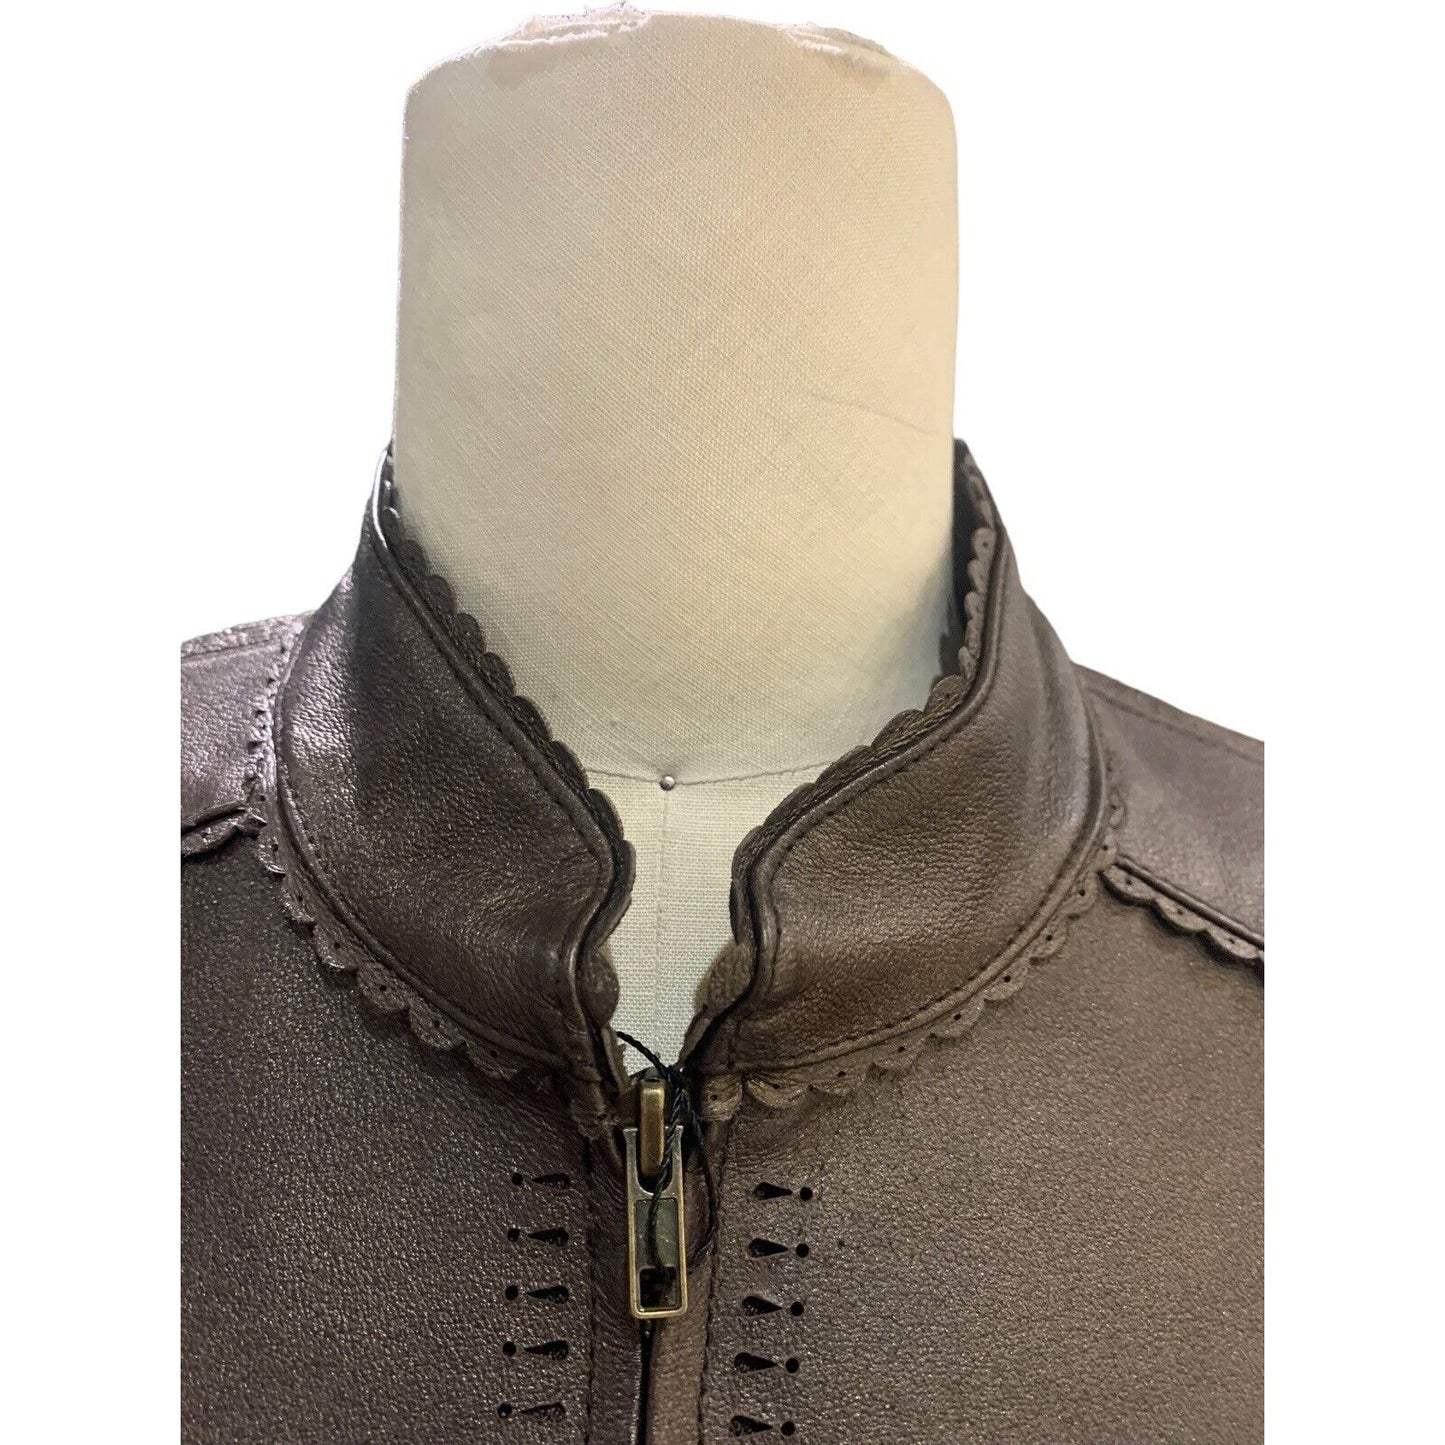 Closeup Of Jacket Collar, Zipper and Stitching